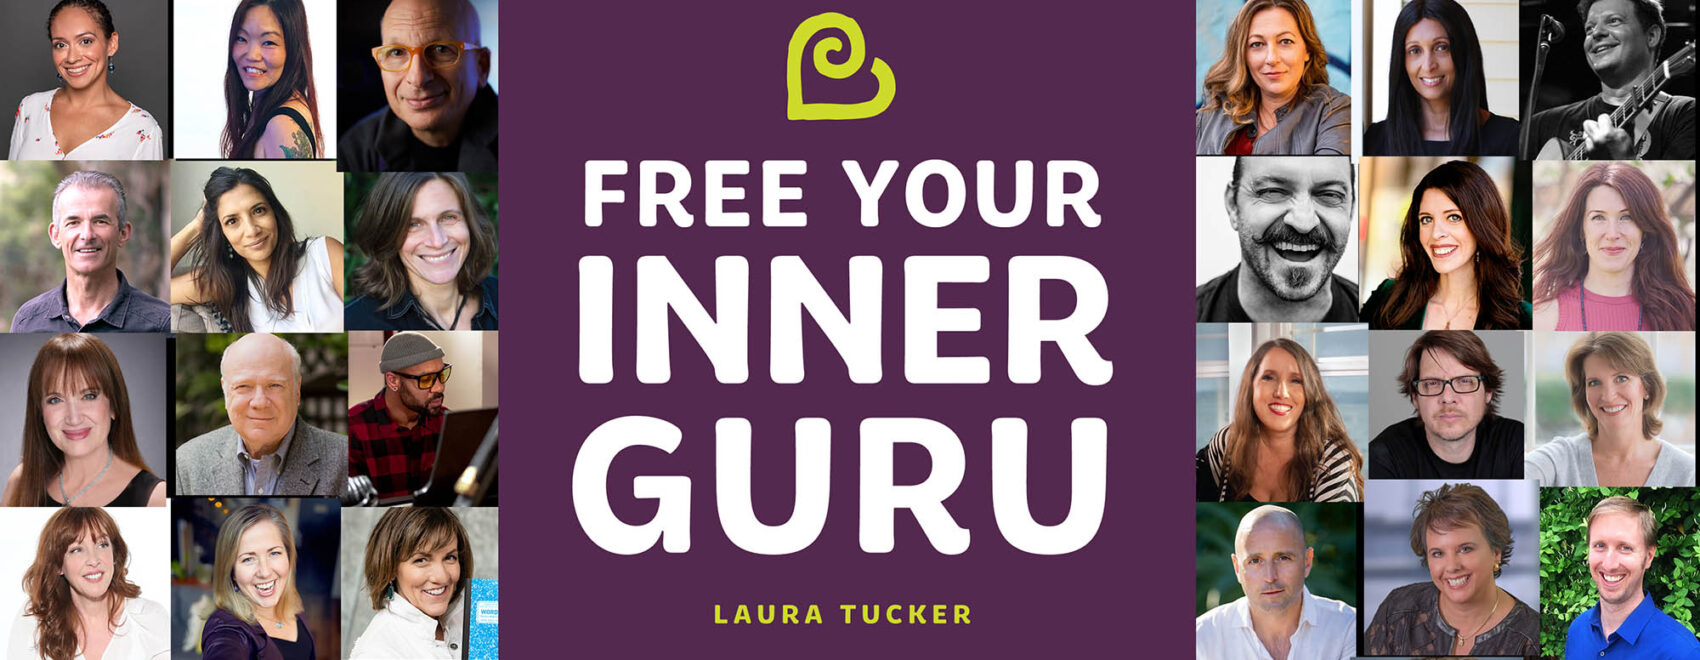 Free Your Inner Guru Podcast with Laura Tucker Guest Photos Seth Godin Lee Harris Brad Warner Christine Arylo Kim Chestney